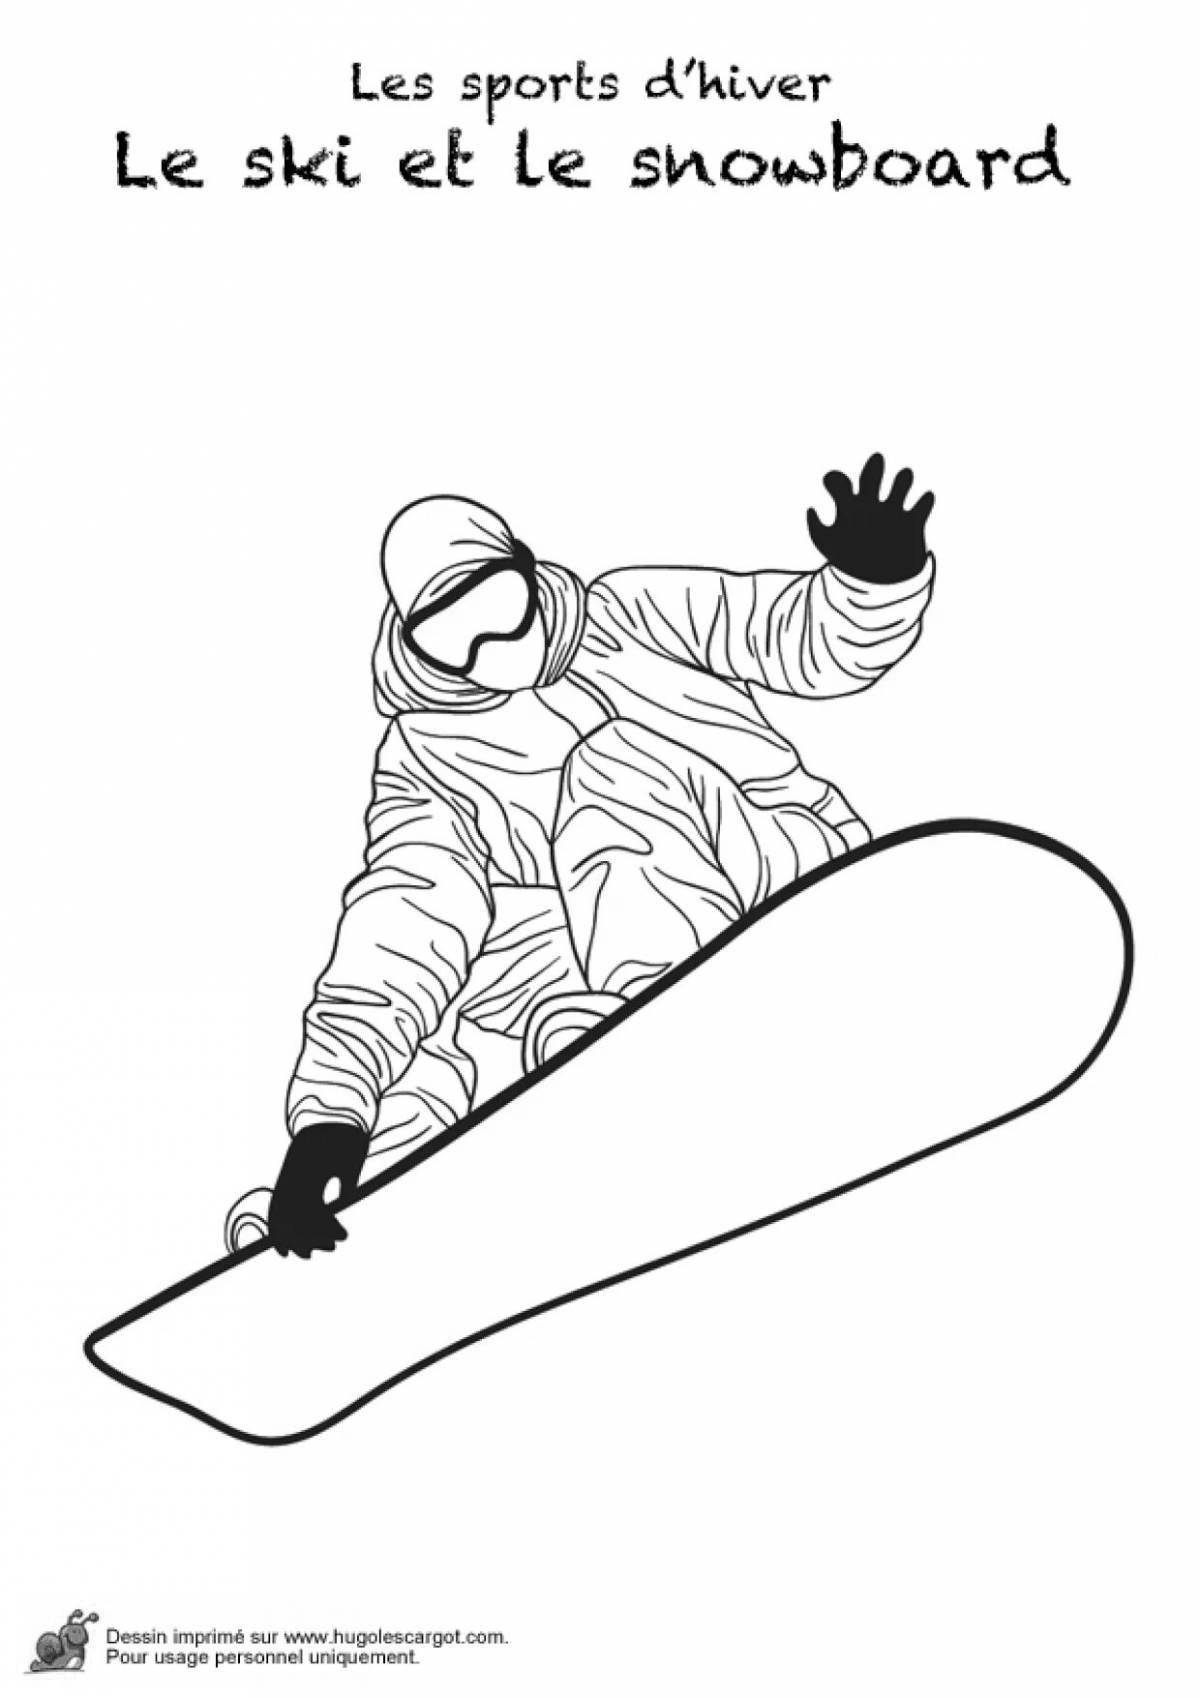 Children's snowboard coloring book